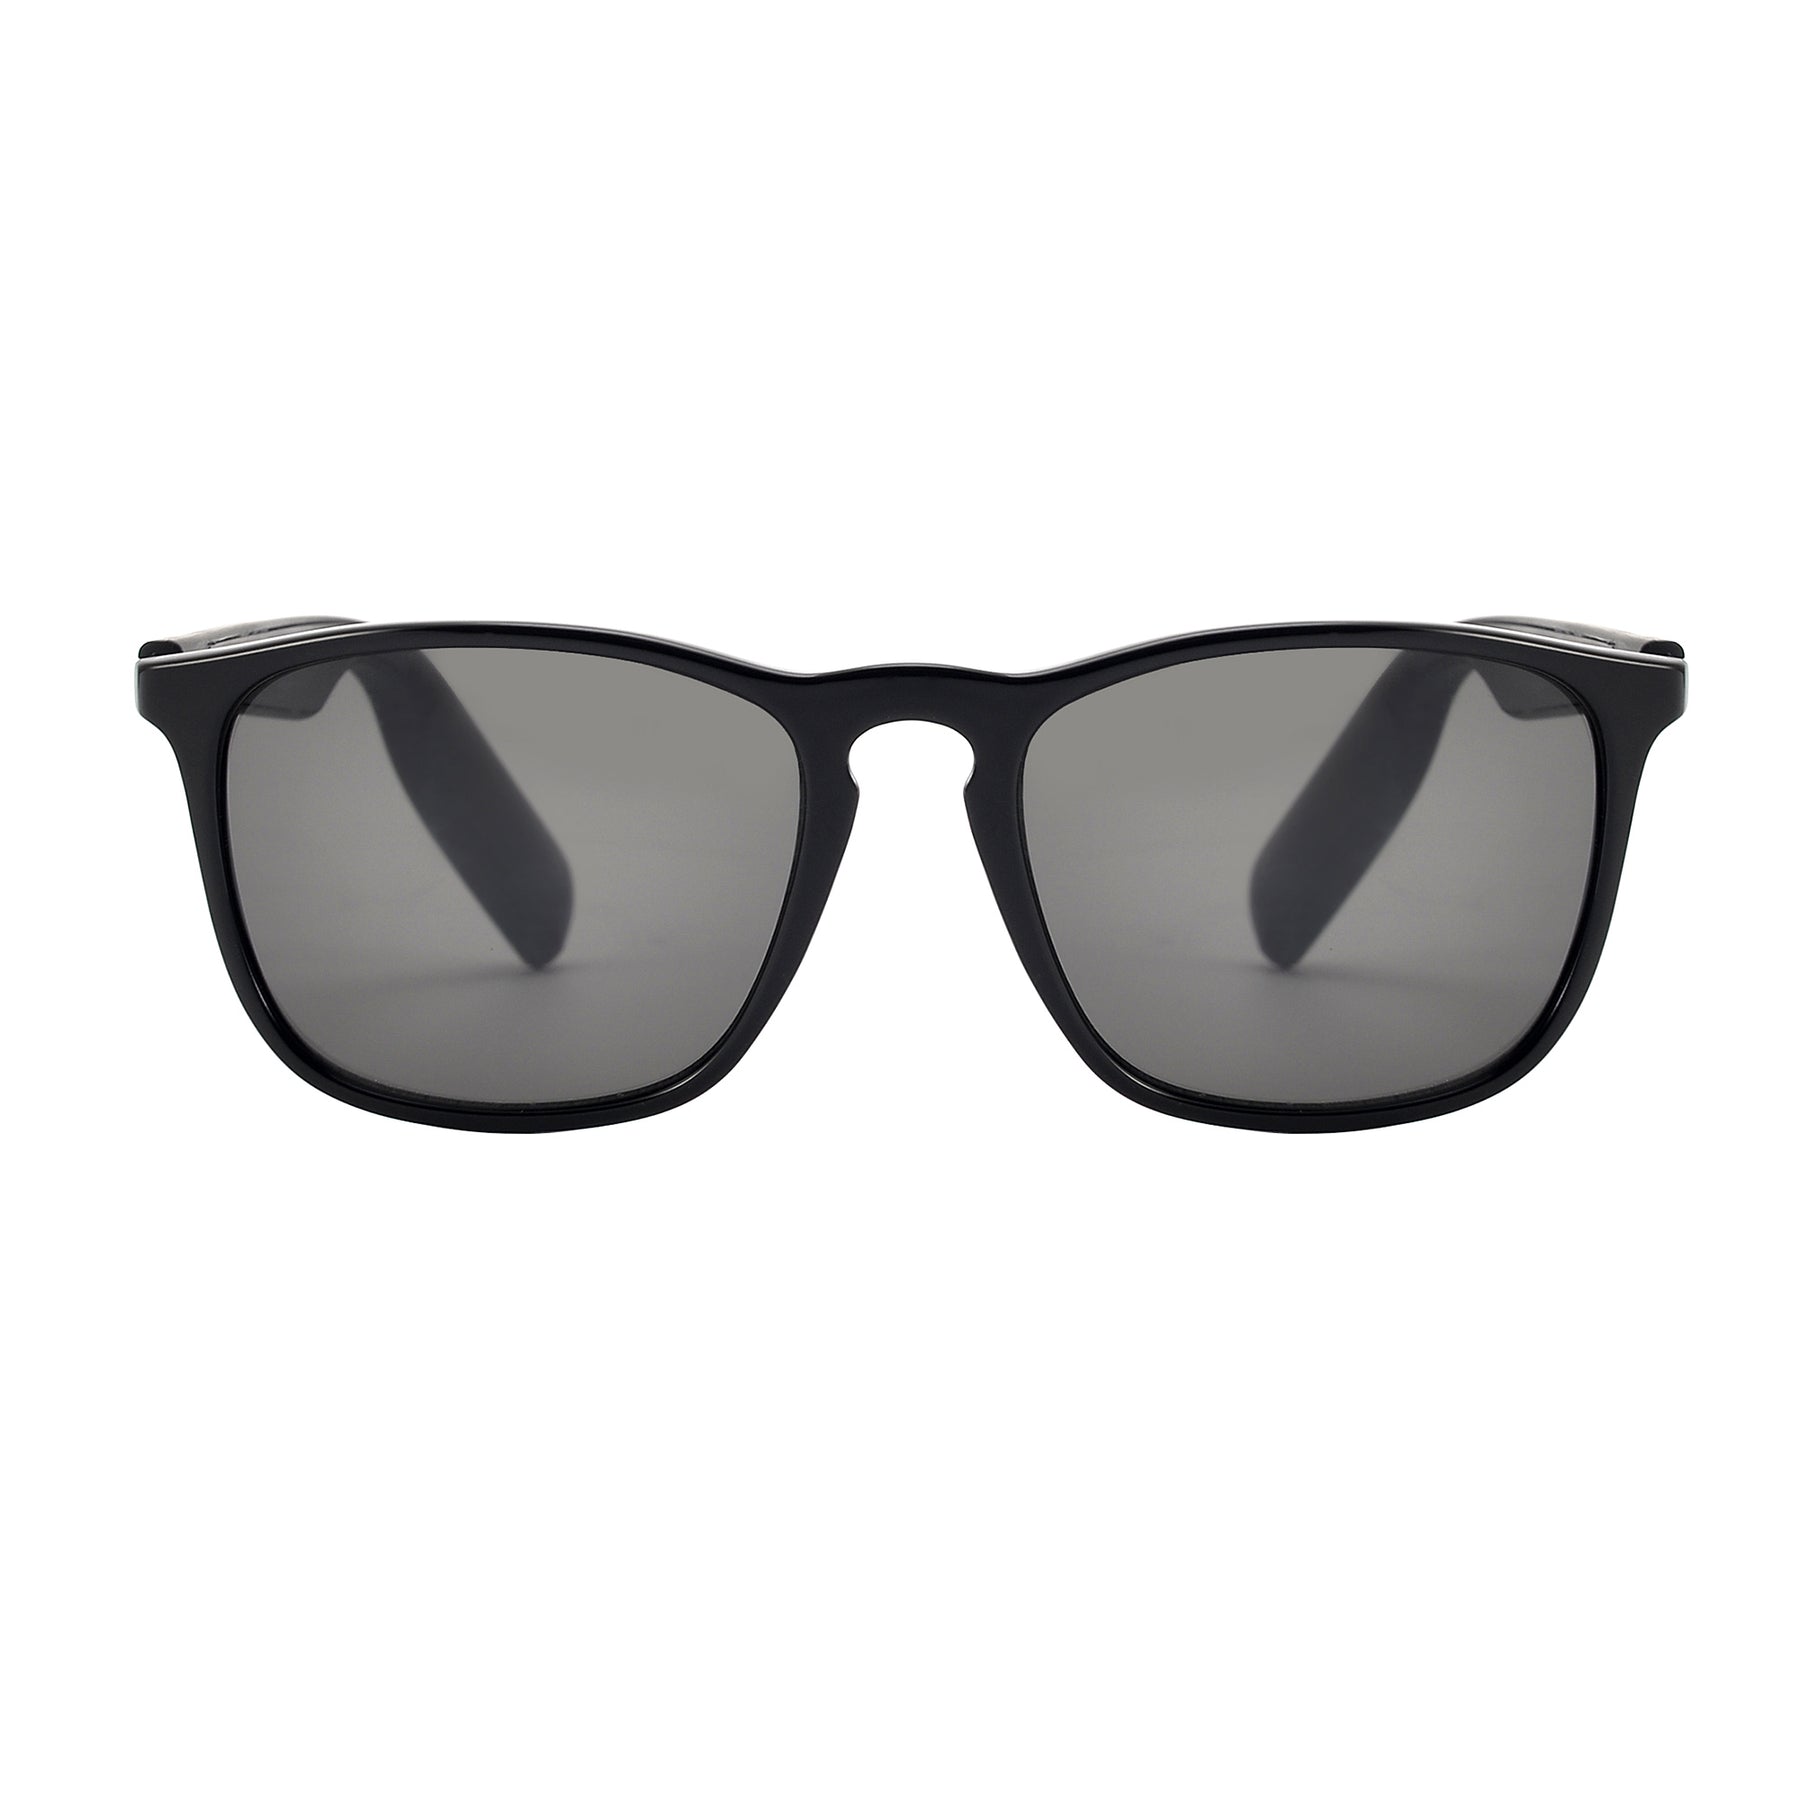 Smart Audio Sunglasses, Interchangeable Rim With Wireless Bluetooth ...